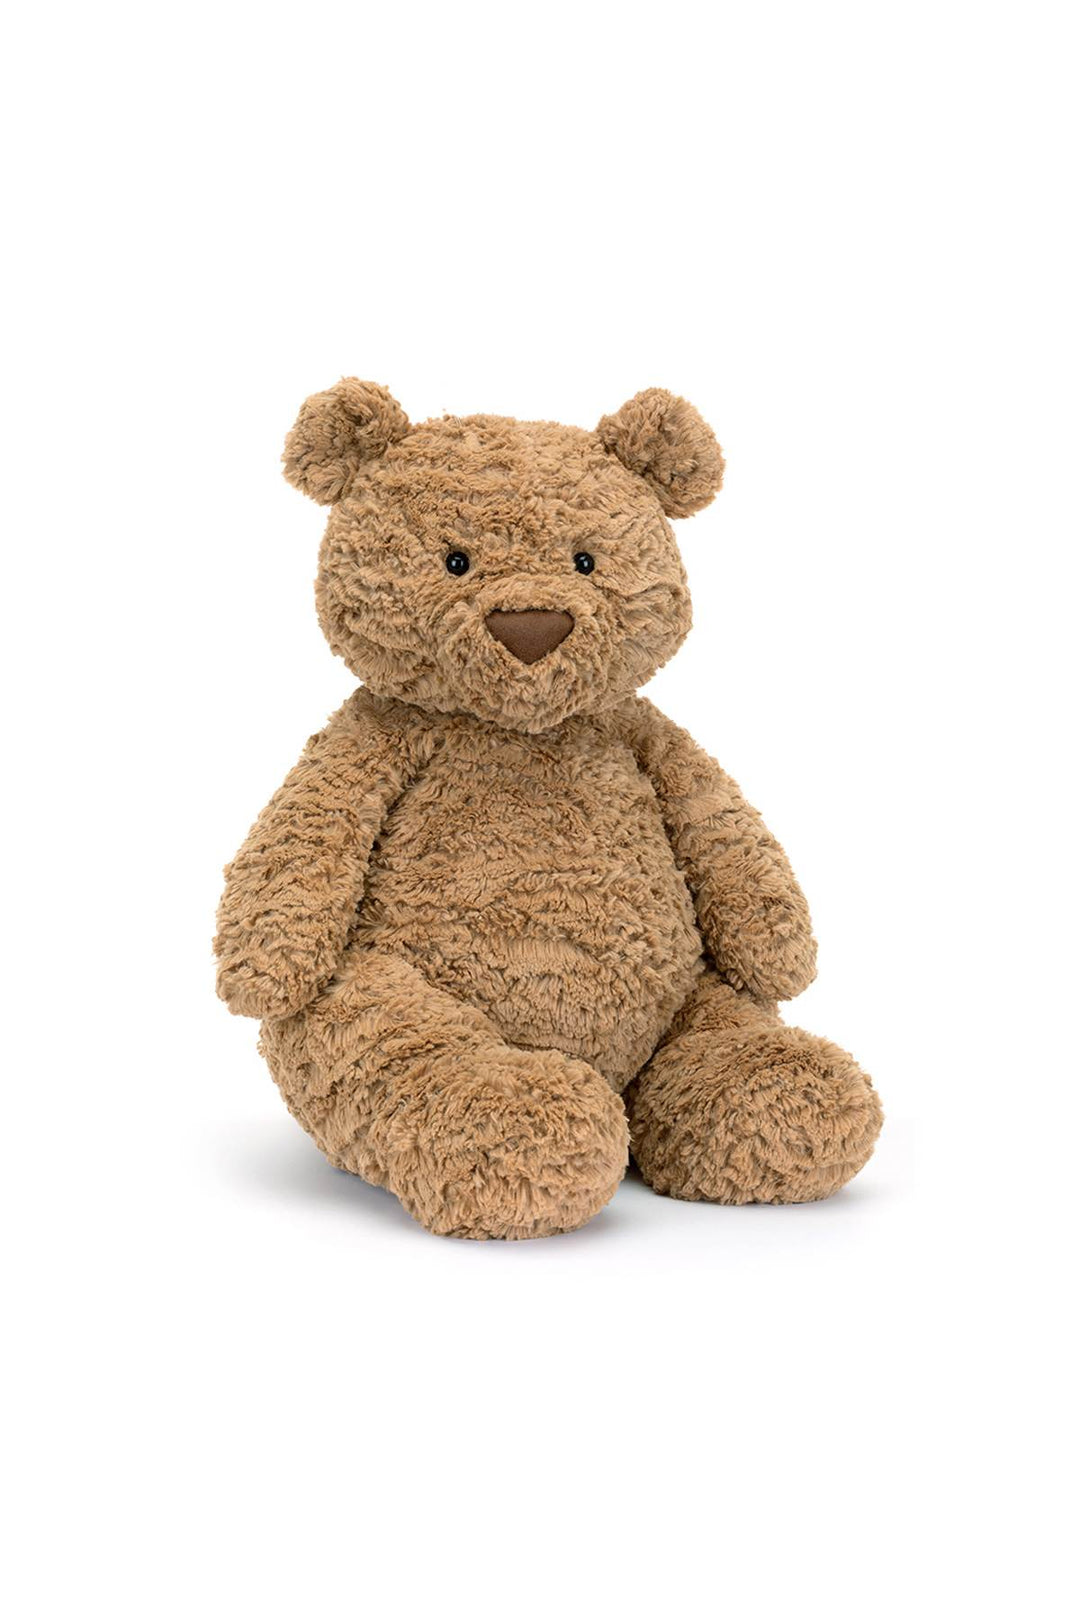 teddy bear named barthol-0